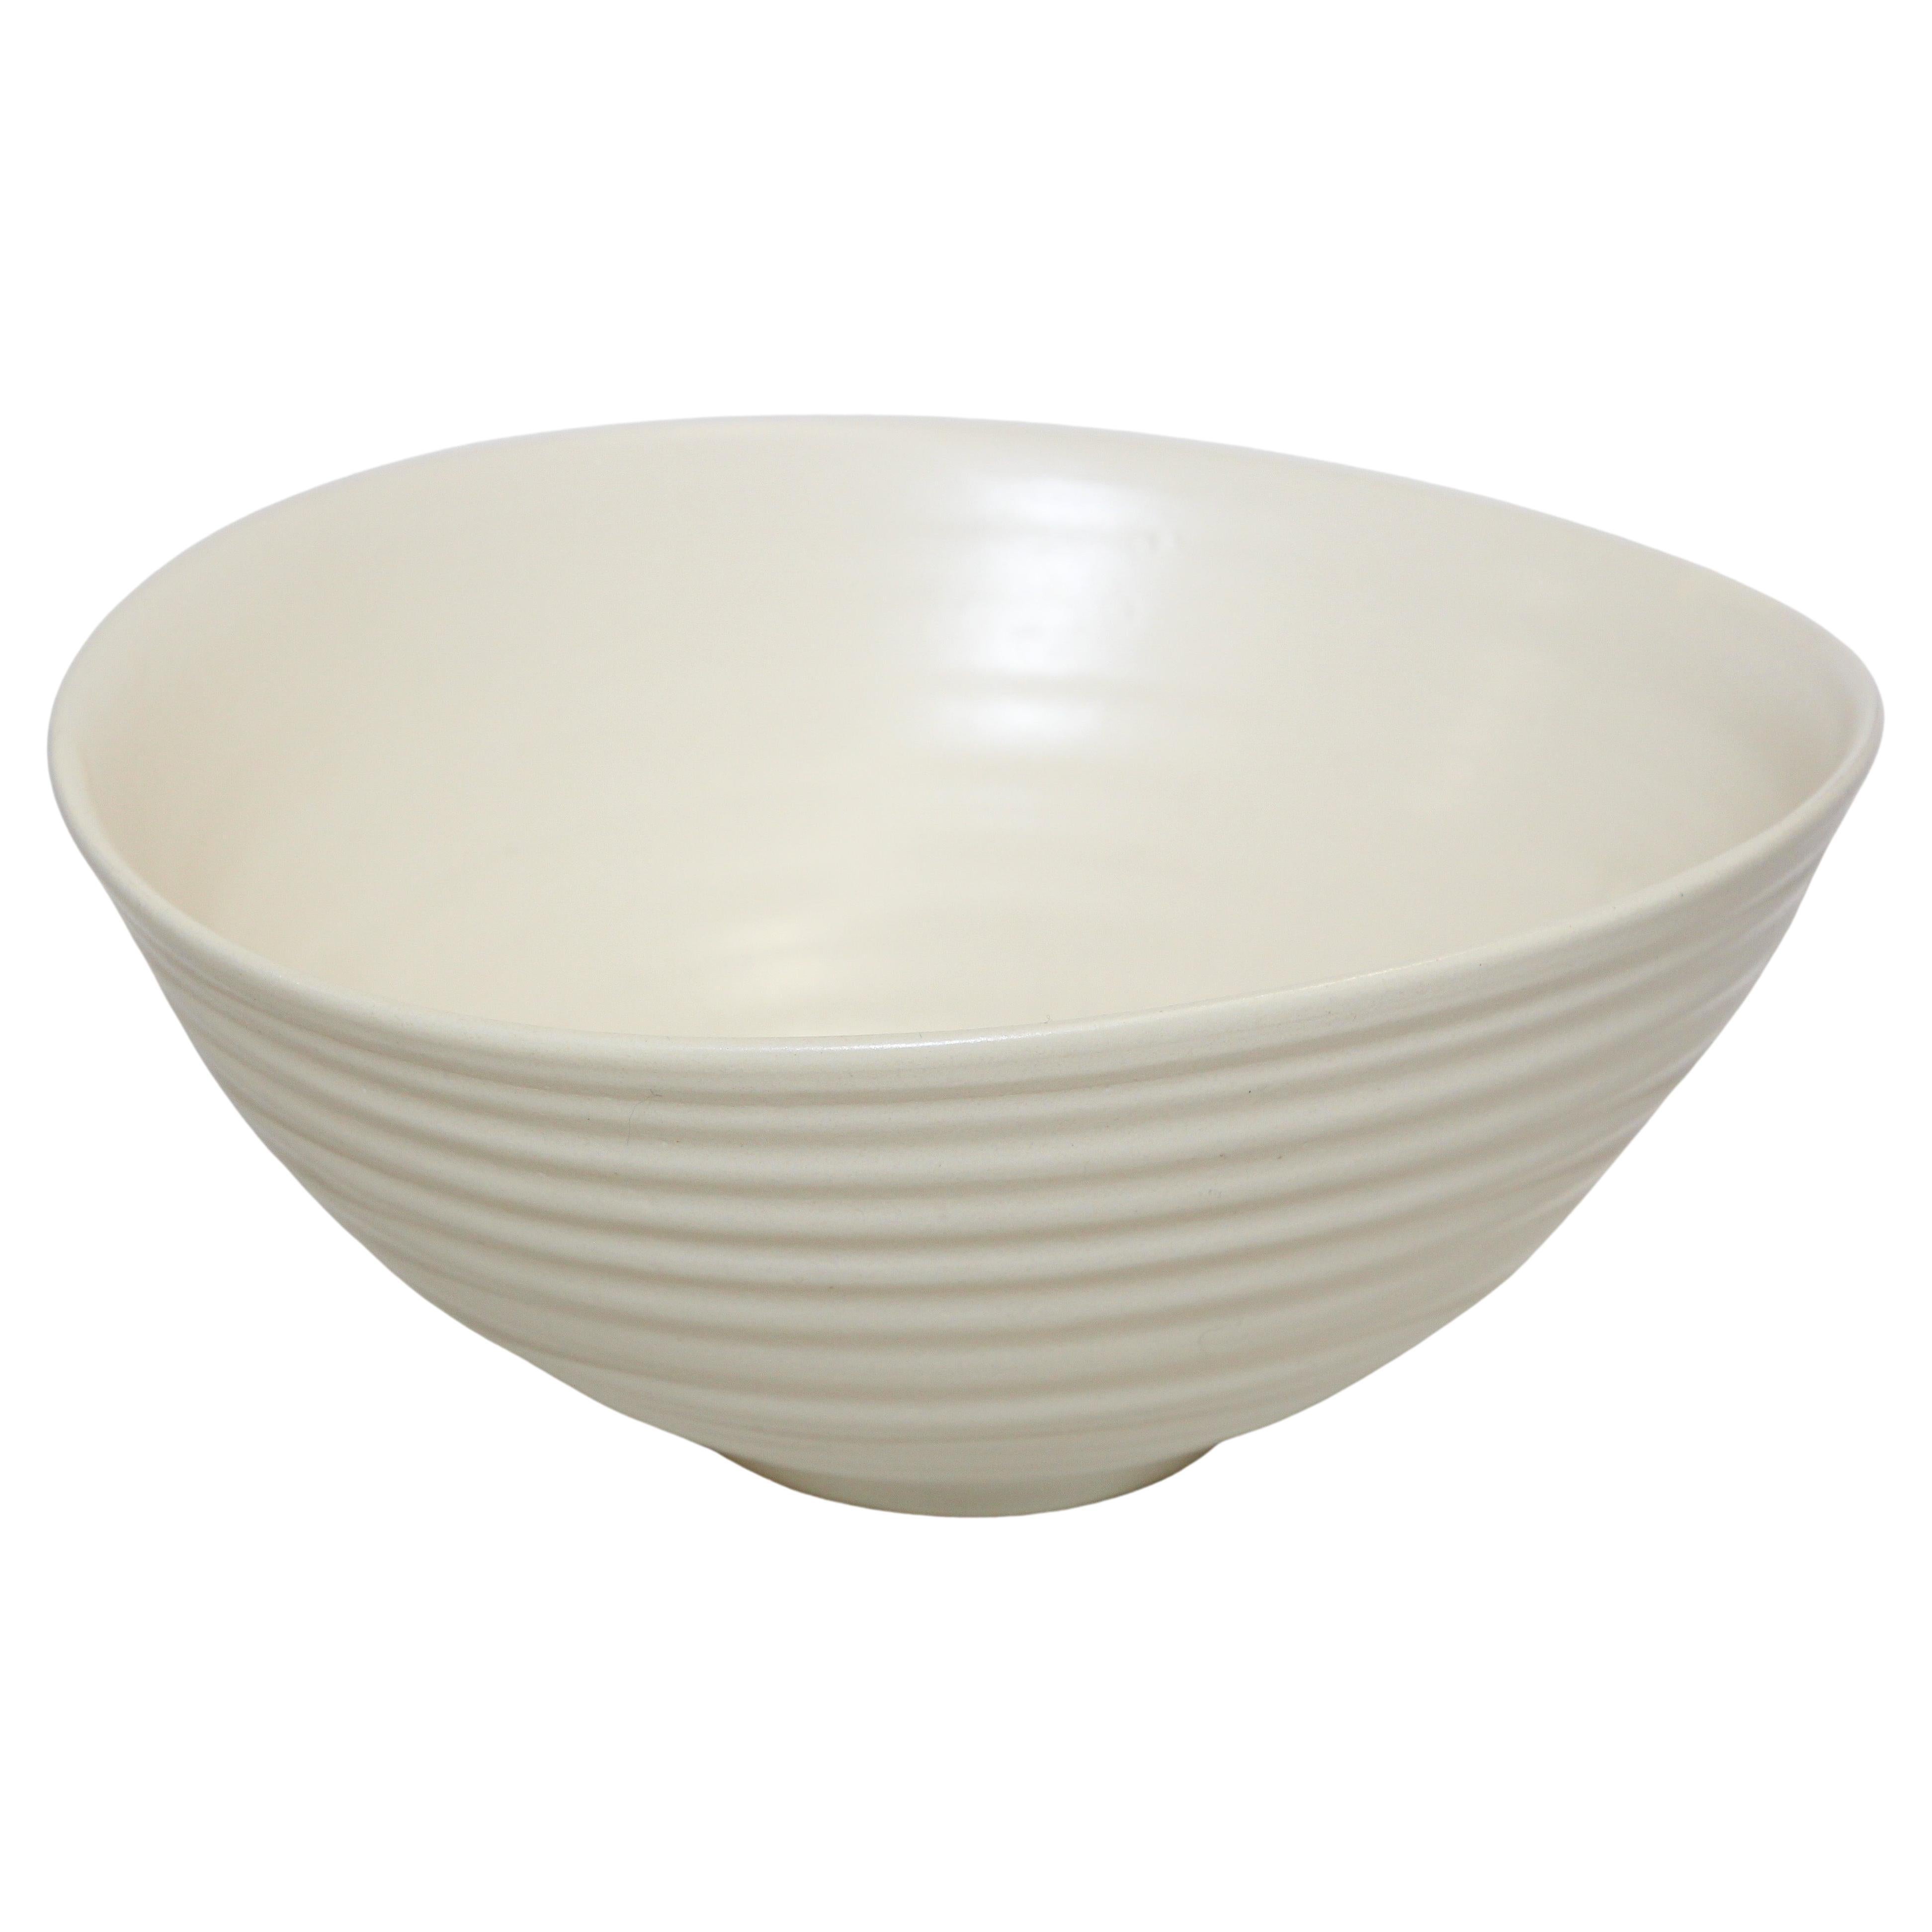 Simon Moore Studio Hand Made Pottery White Bowl  For Sale